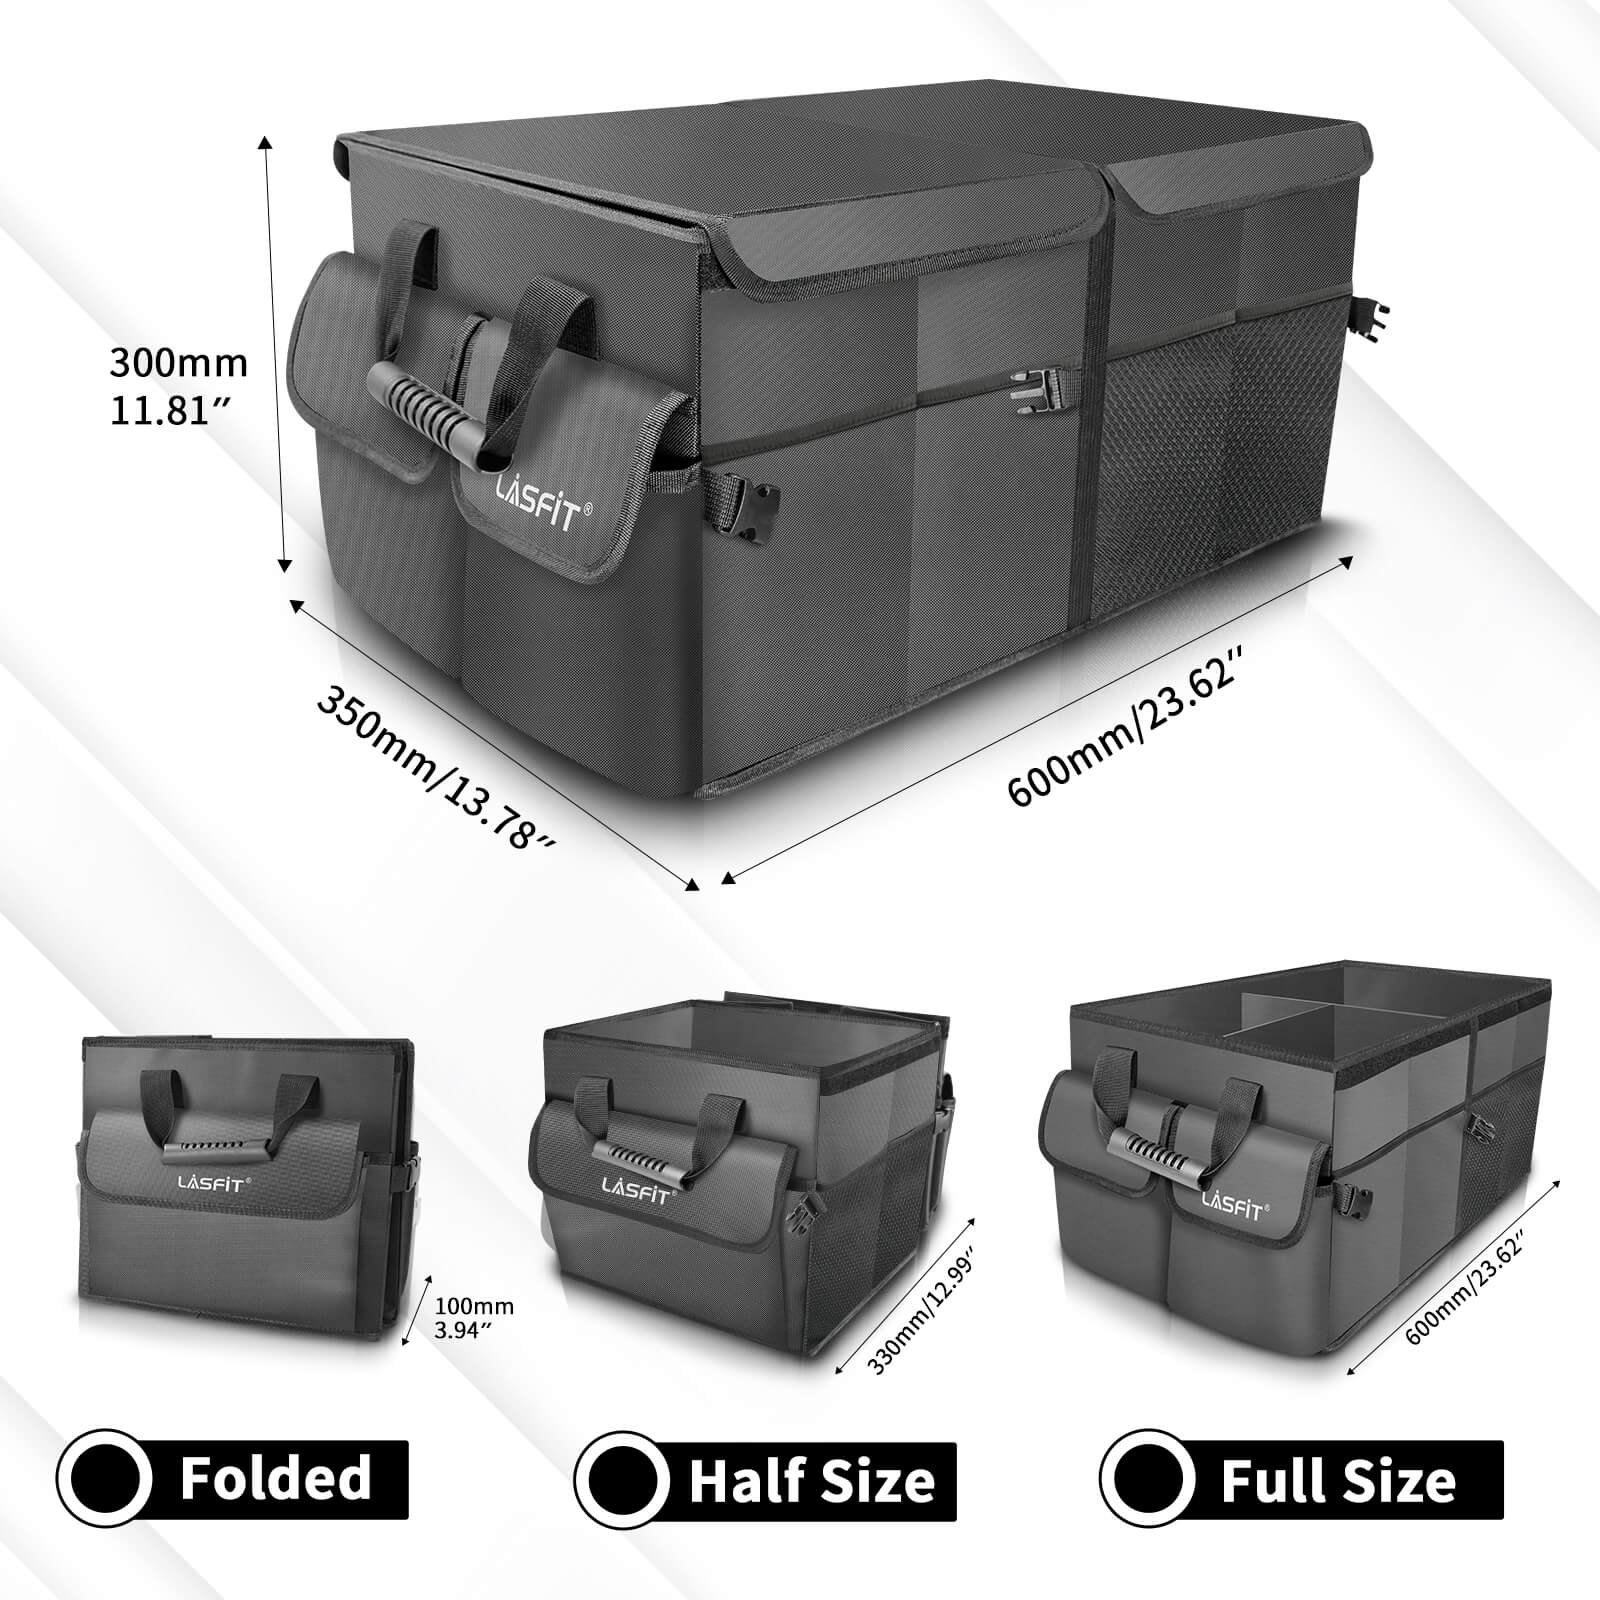 Trunk Organizer Collapsible Folding Caddy Car Truck Auto Storage Bin Bag  New !